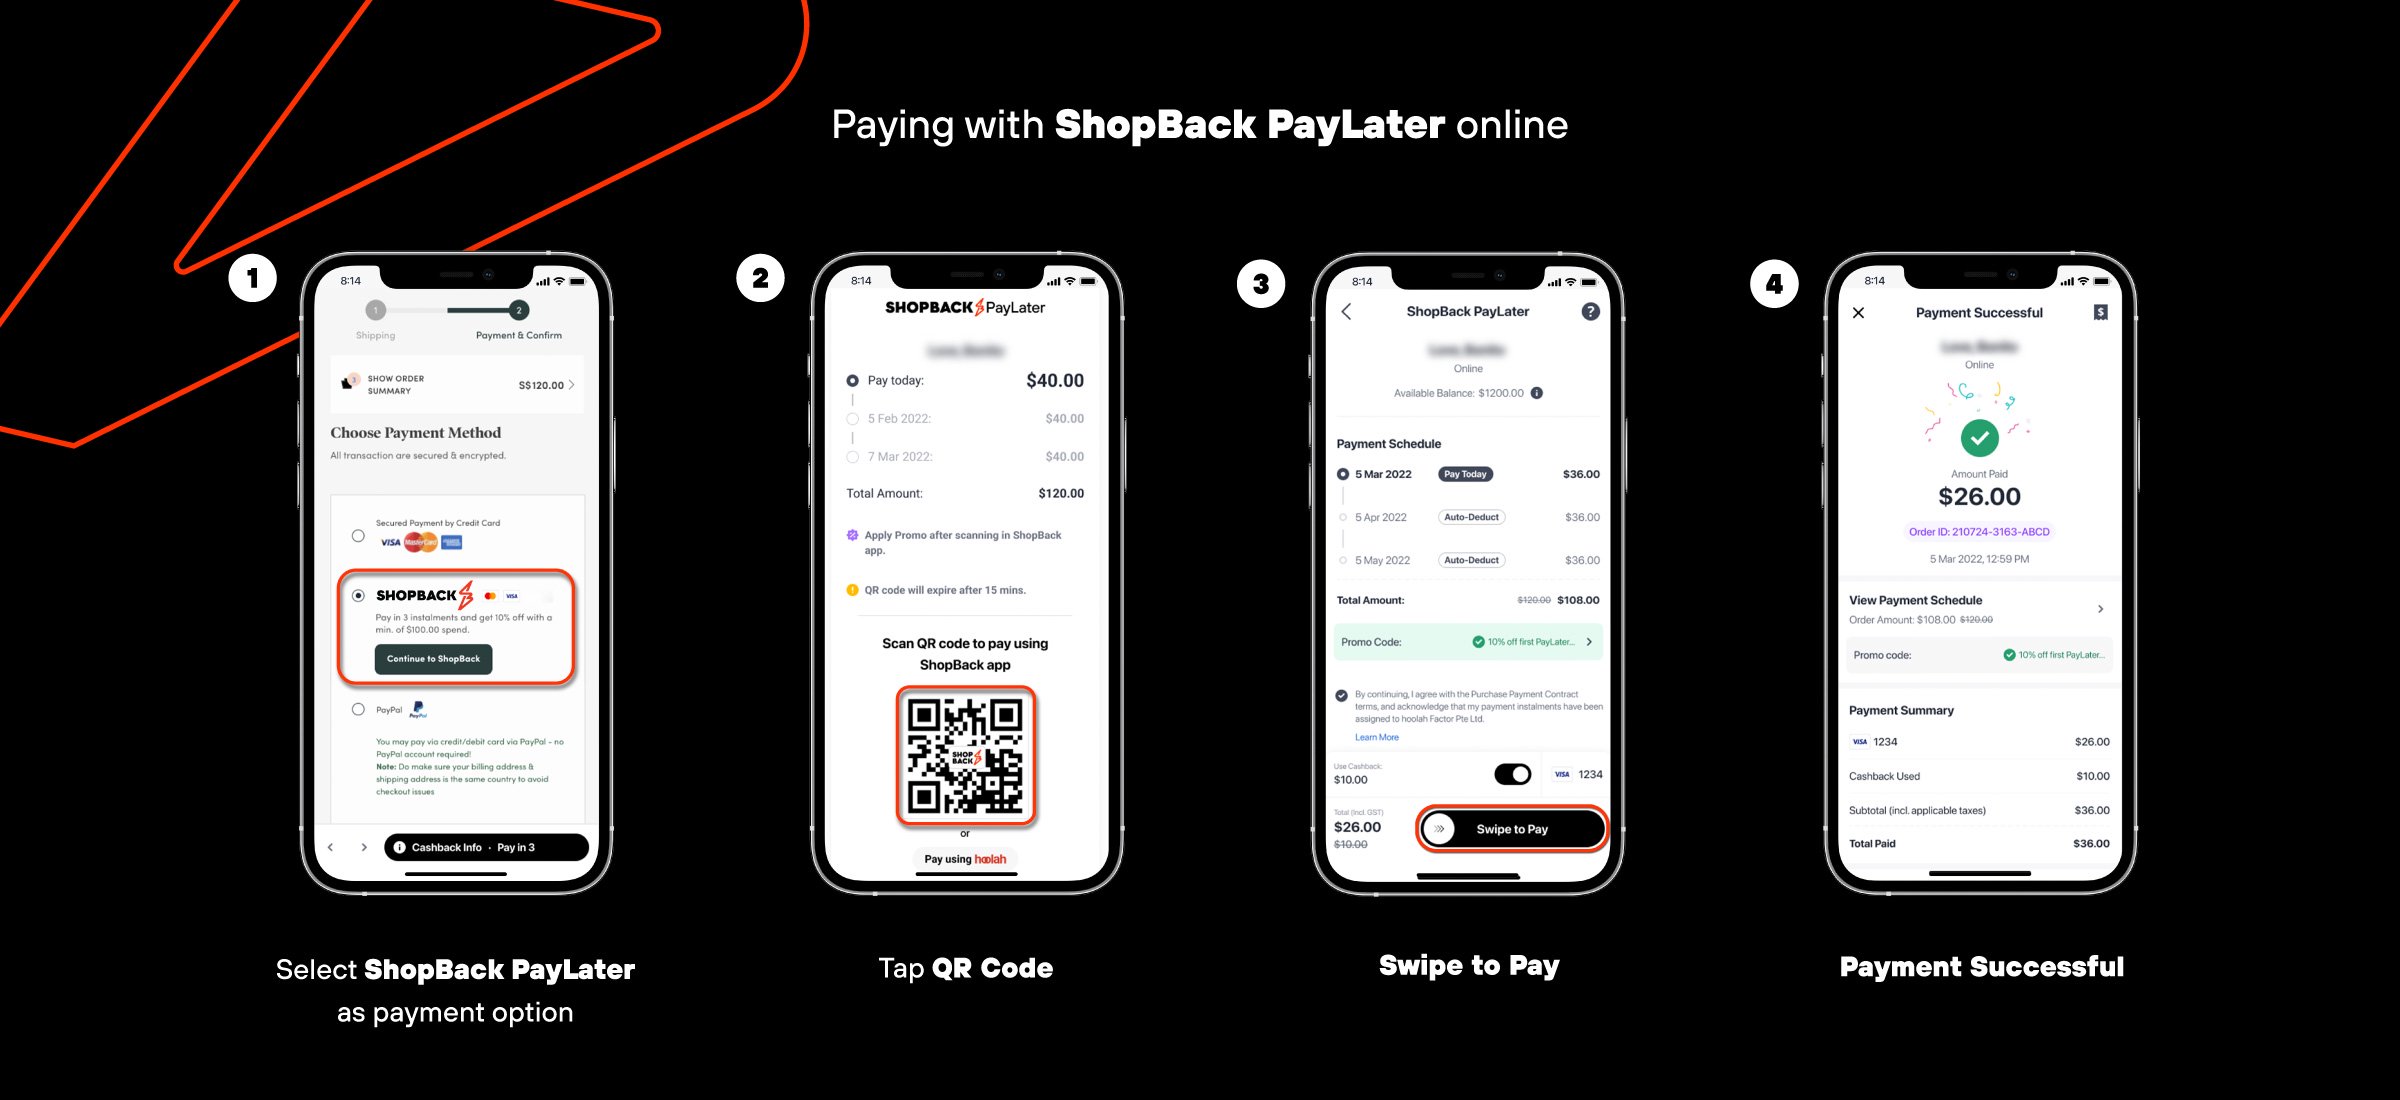 How to use ShopBack PayLater